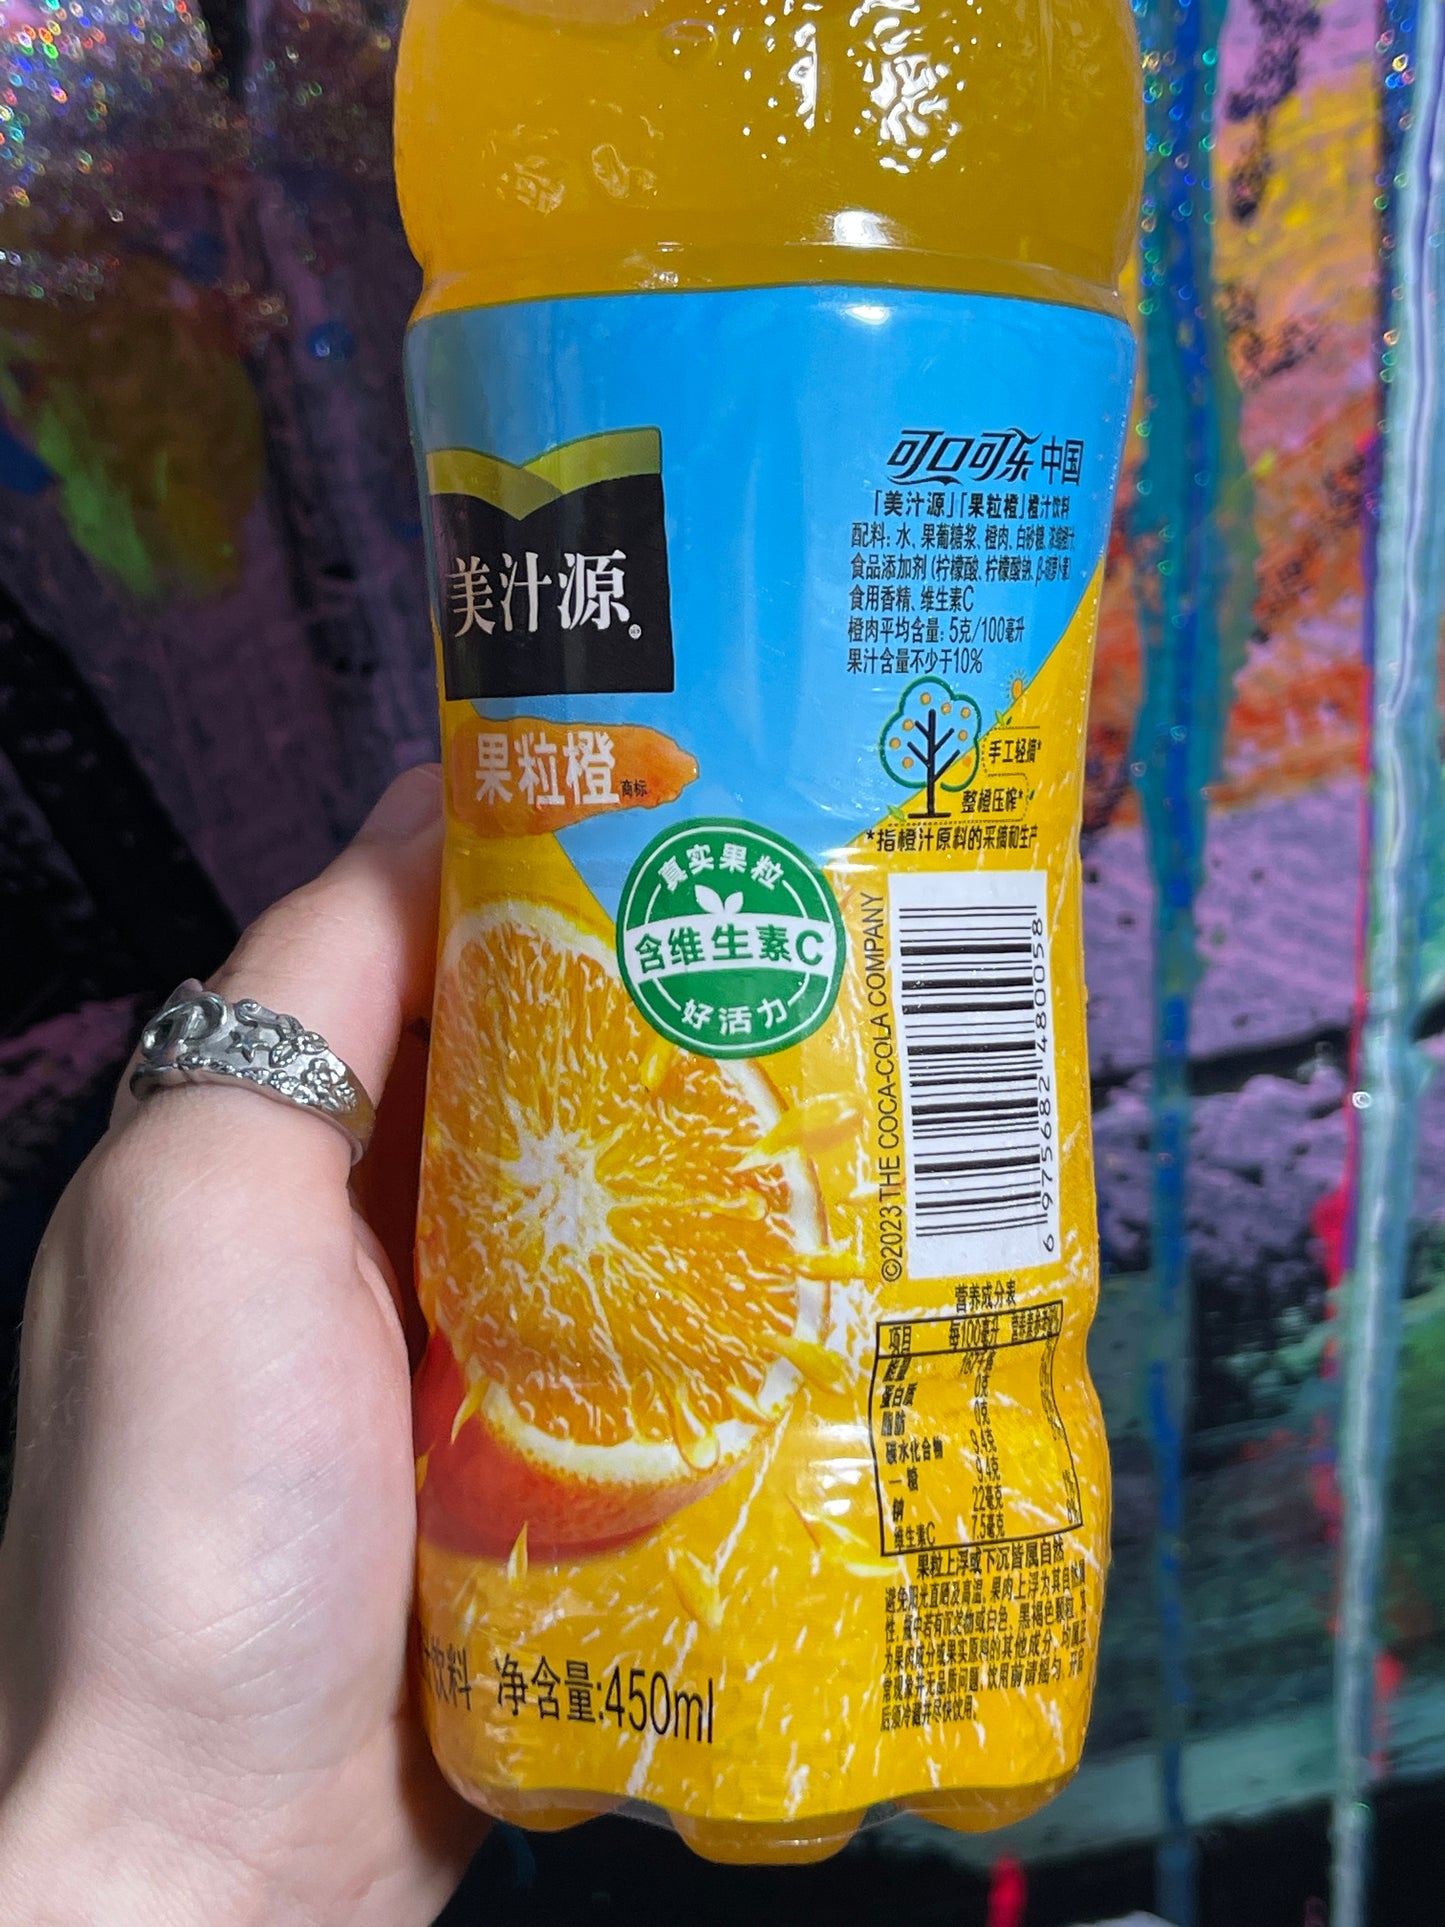 Chinese Minute Maid Orange Juice